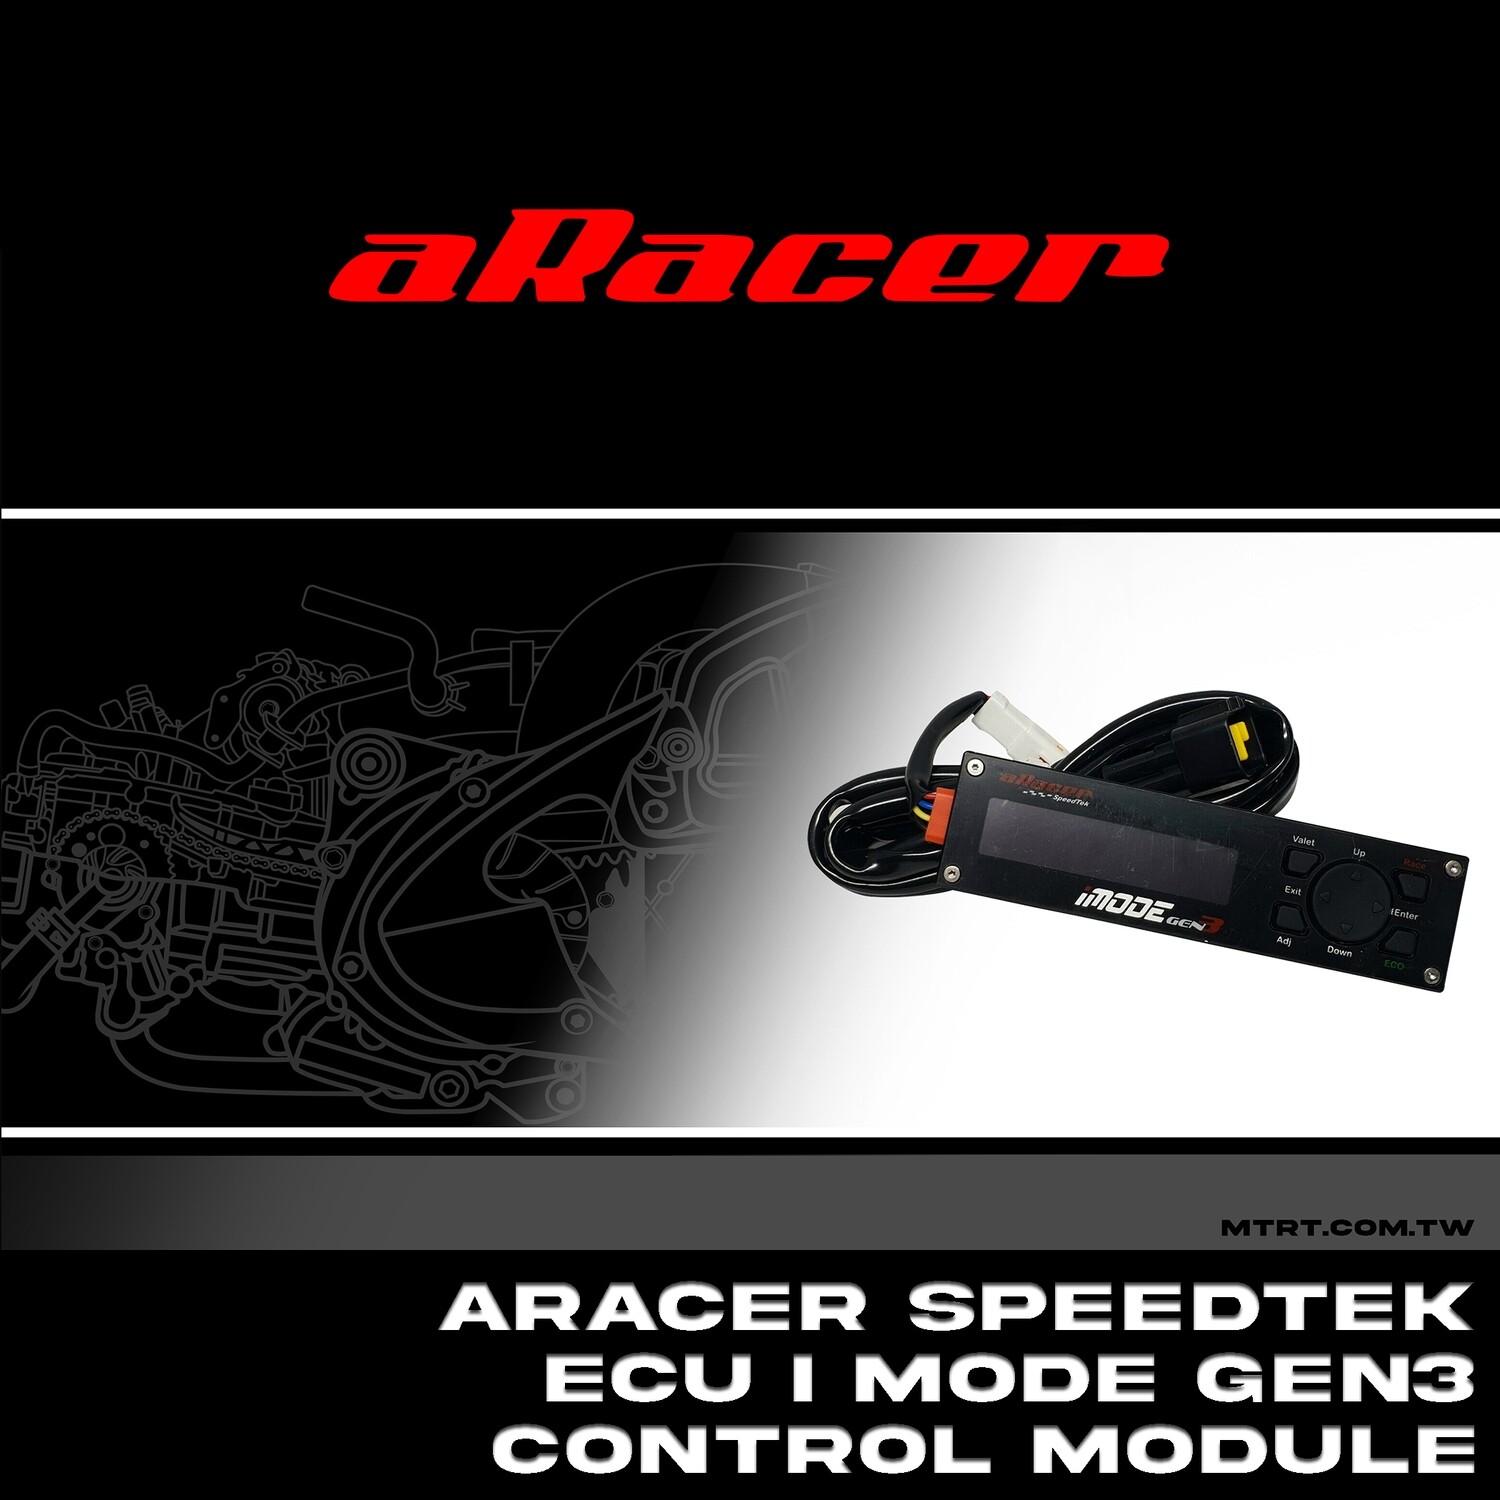 ARACER speedtek ECU i MODE GEN3 CONTROL MODULE